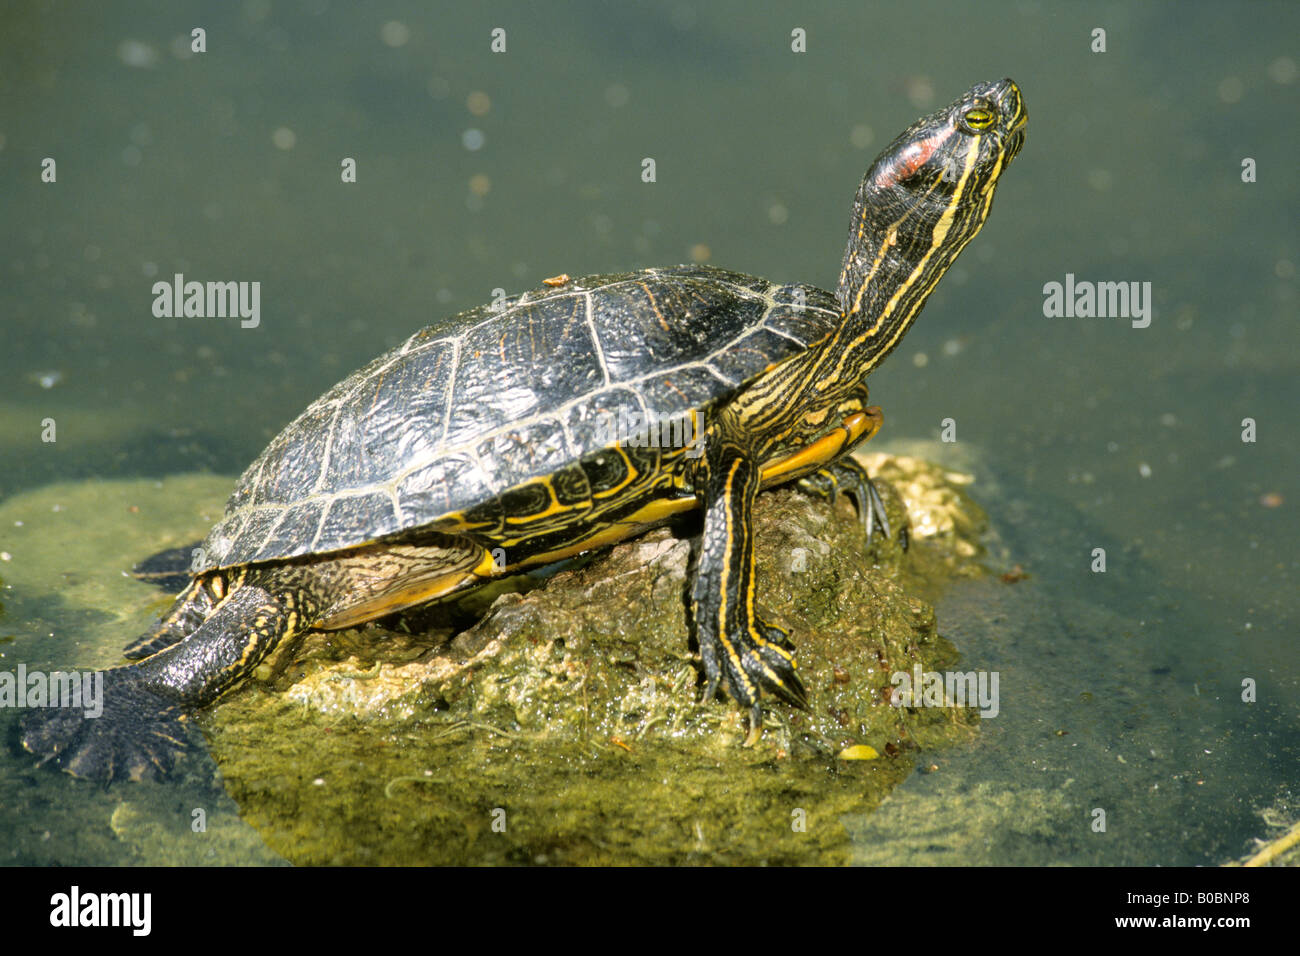 Rosso-eared tartaruga, tartaruga dalle orecchie rosse (Trachemys scripta elegans, Pseudemys scripta elegans), prendendo il sole Foto Stock